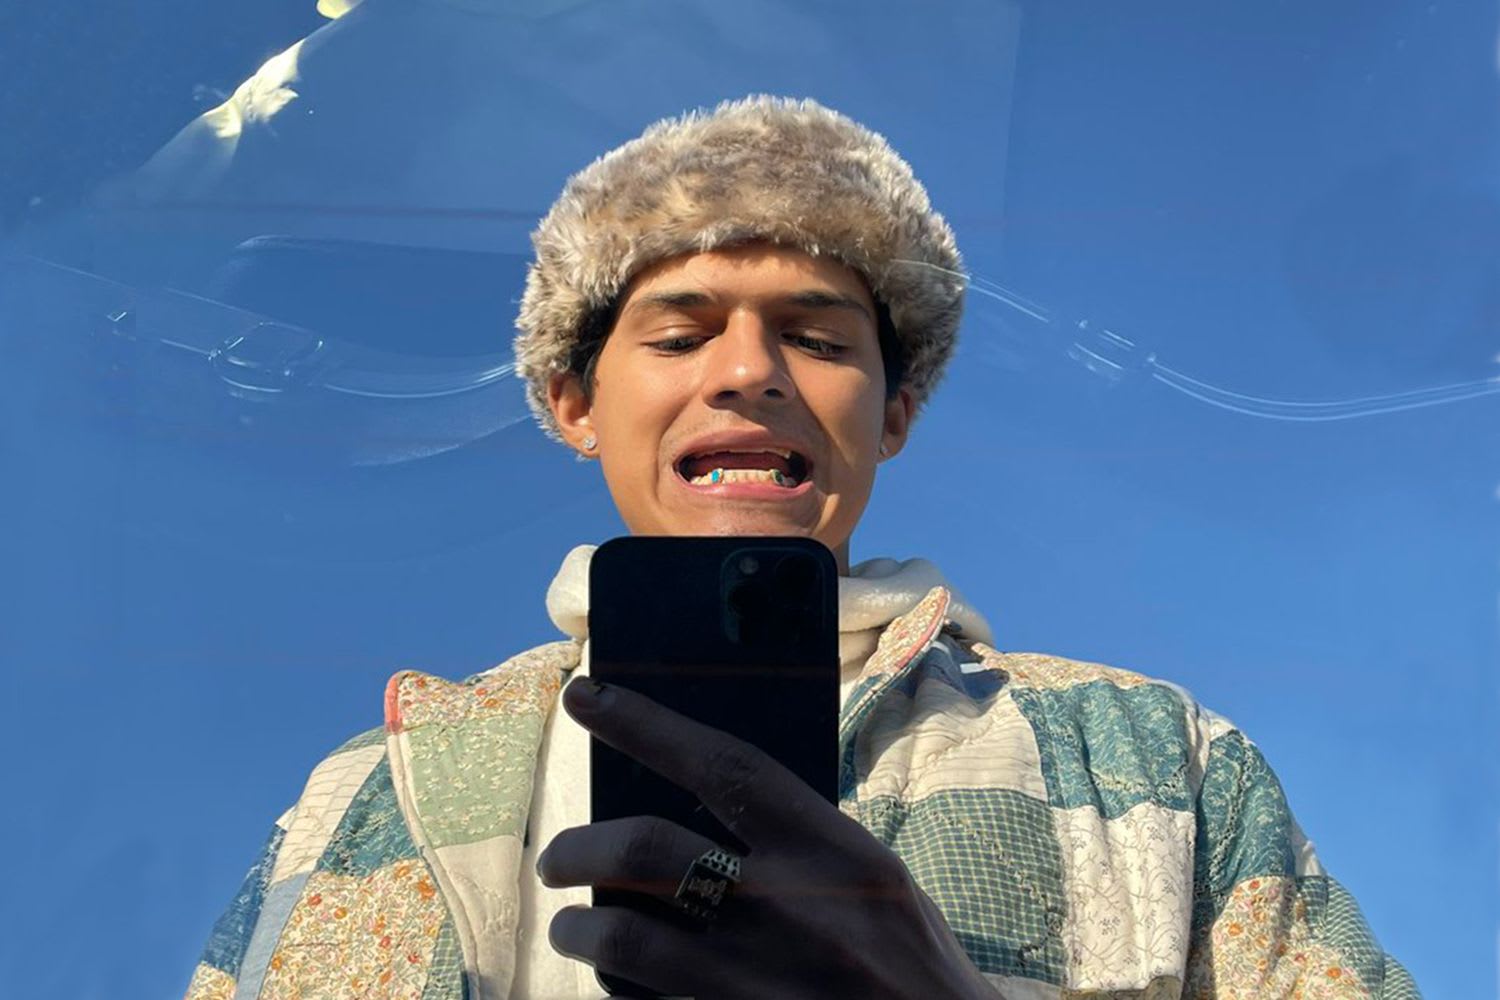 Omar Apollo mirror selfie